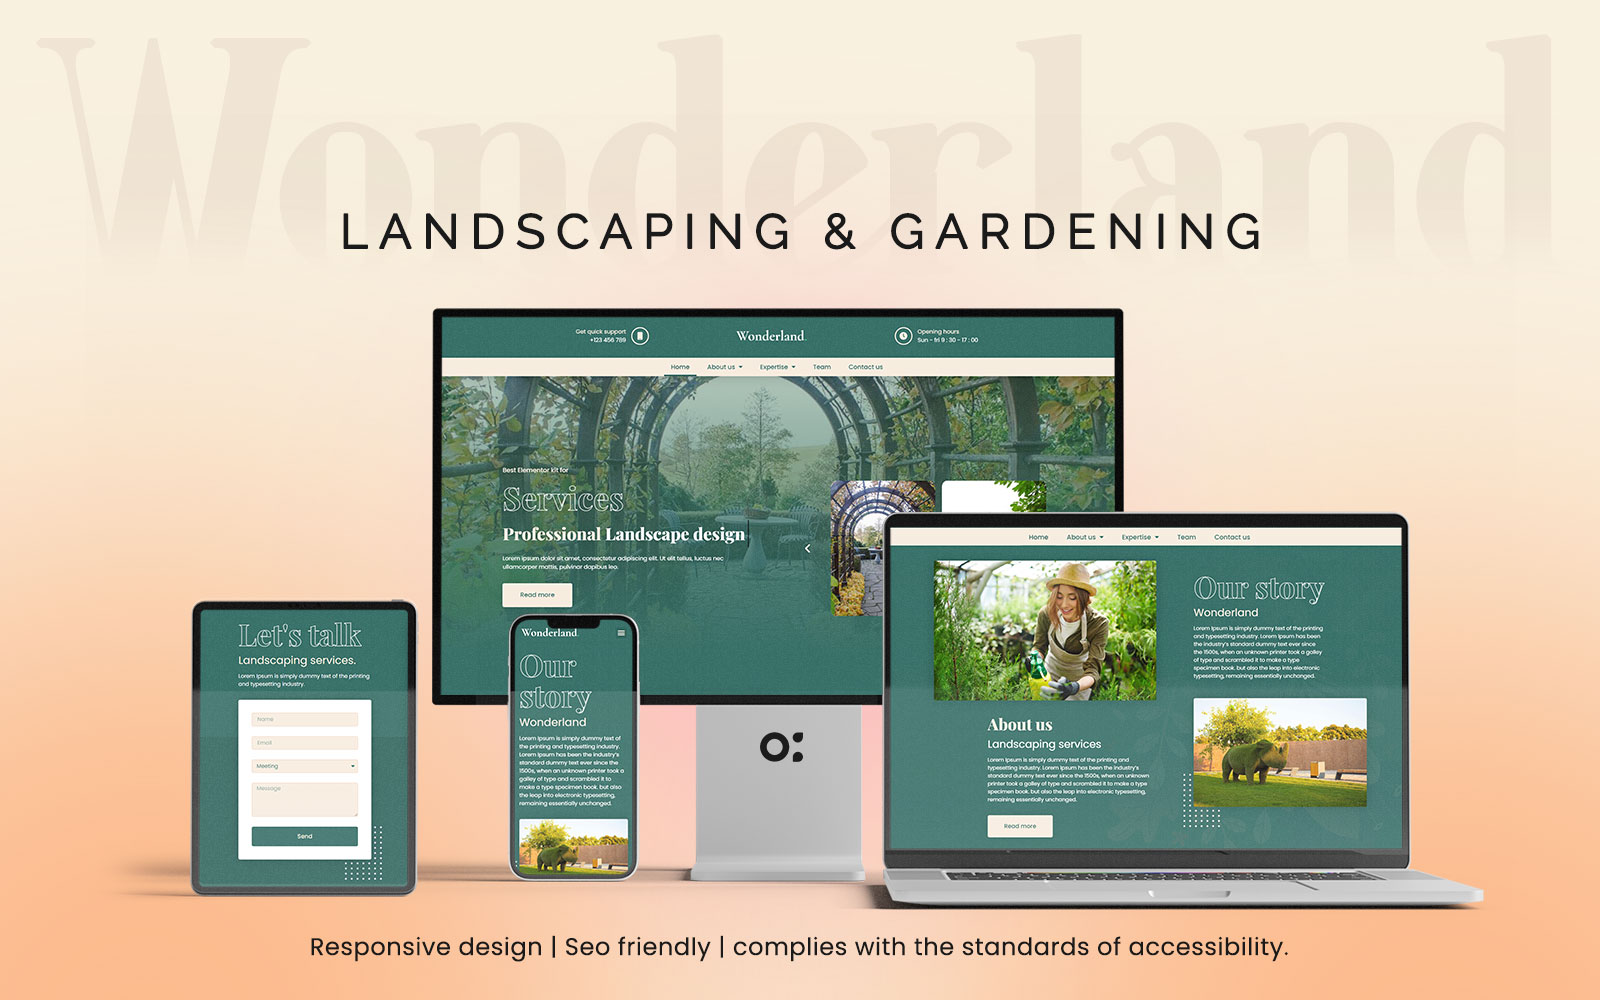 Wonderland Landscaping And Gardening Services Wordpress Theme.